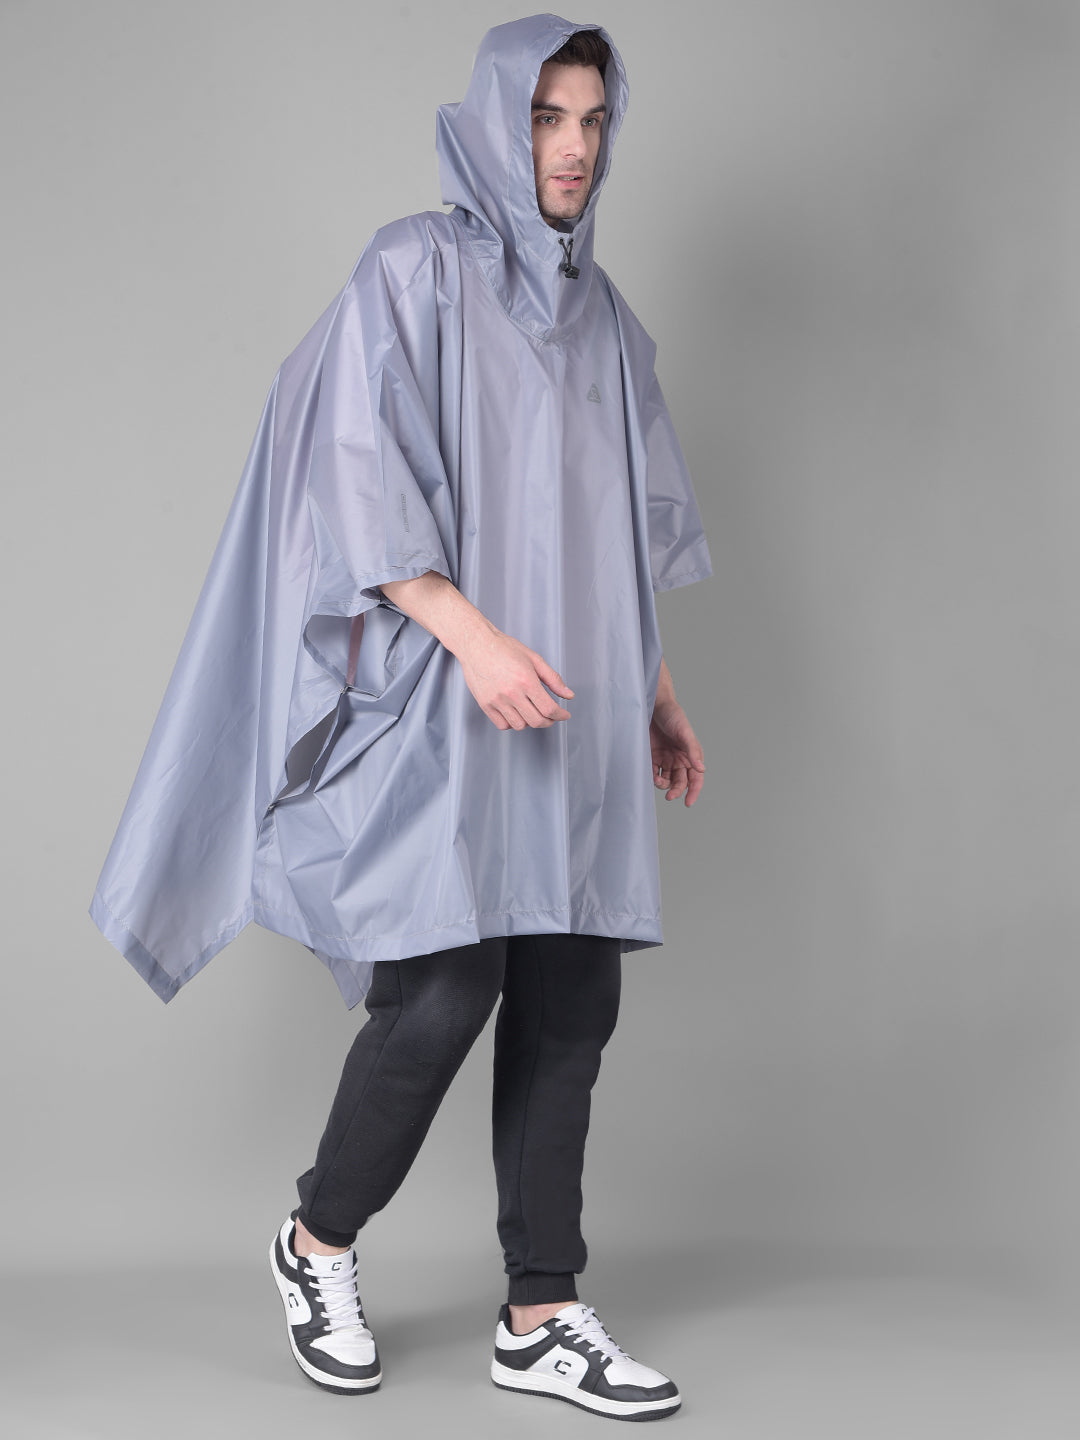 GLOBO Grey Unisex Outdoor Lightweight Rain Poncho for Fashionable Waterproof Weather Protection - Medium, Grey